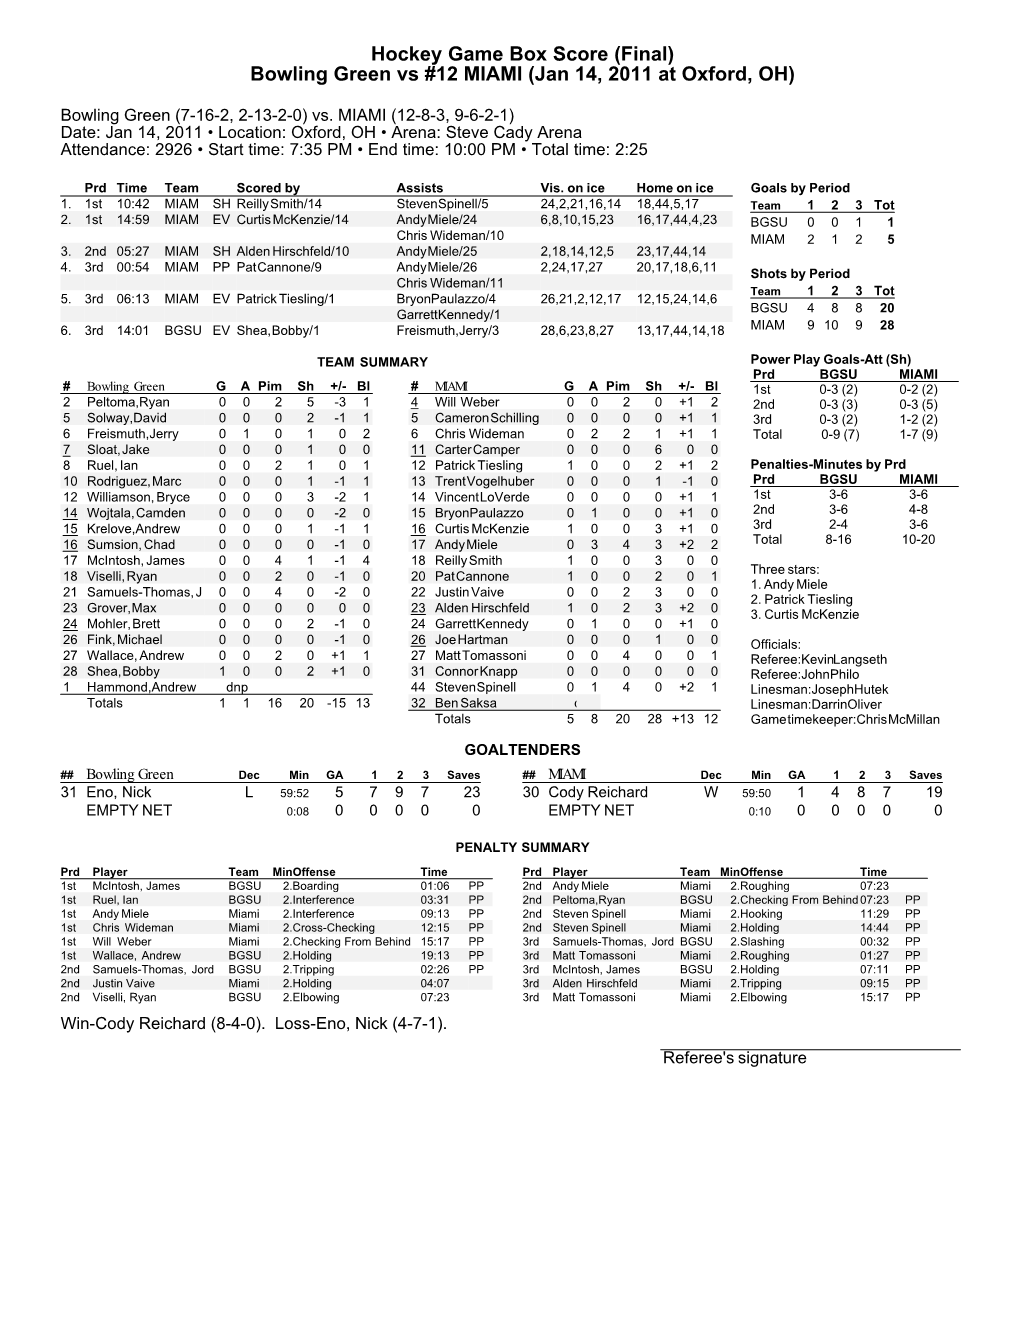 Hockey Game Box Score (Final) Bowling Green Vs #12 MIAMI (Jan 14, 2011 at Oxford, OH)